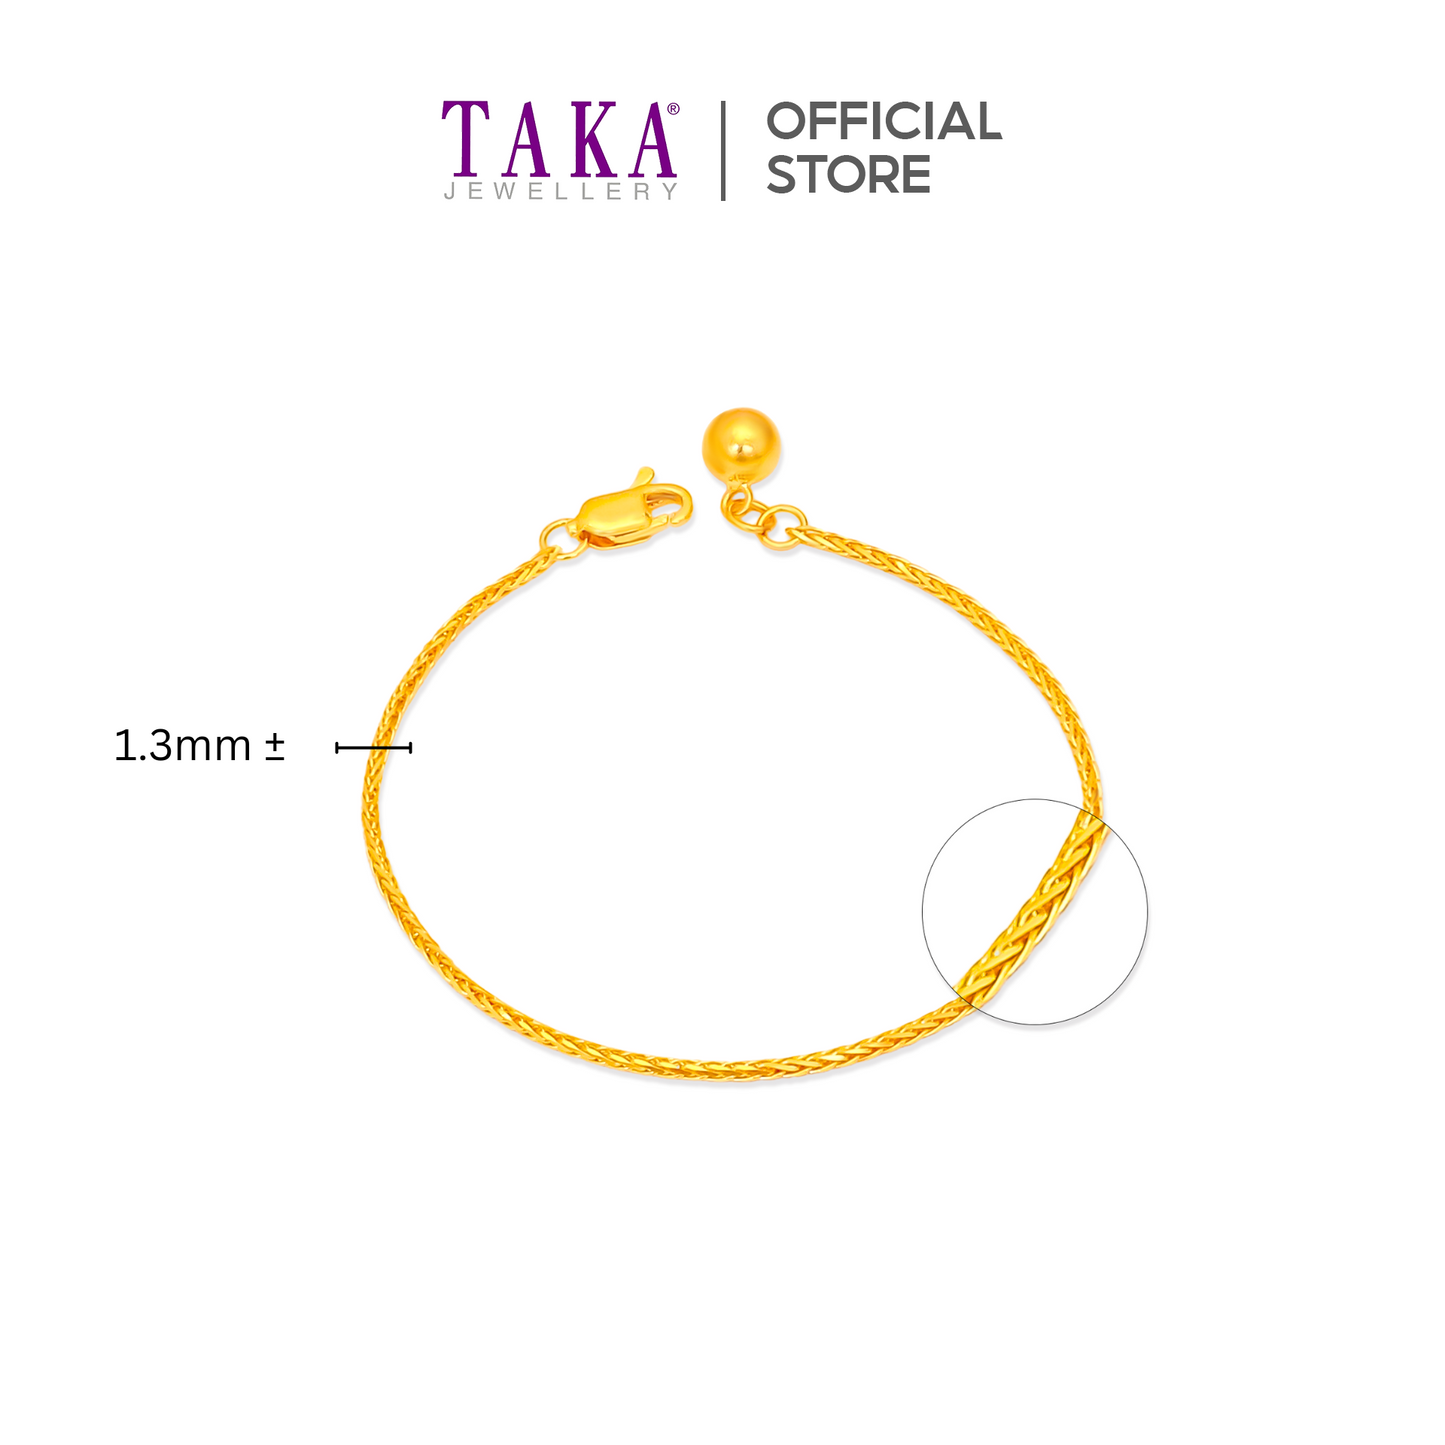 TAKA Jewellery 916 Gold Bracelet with Bell